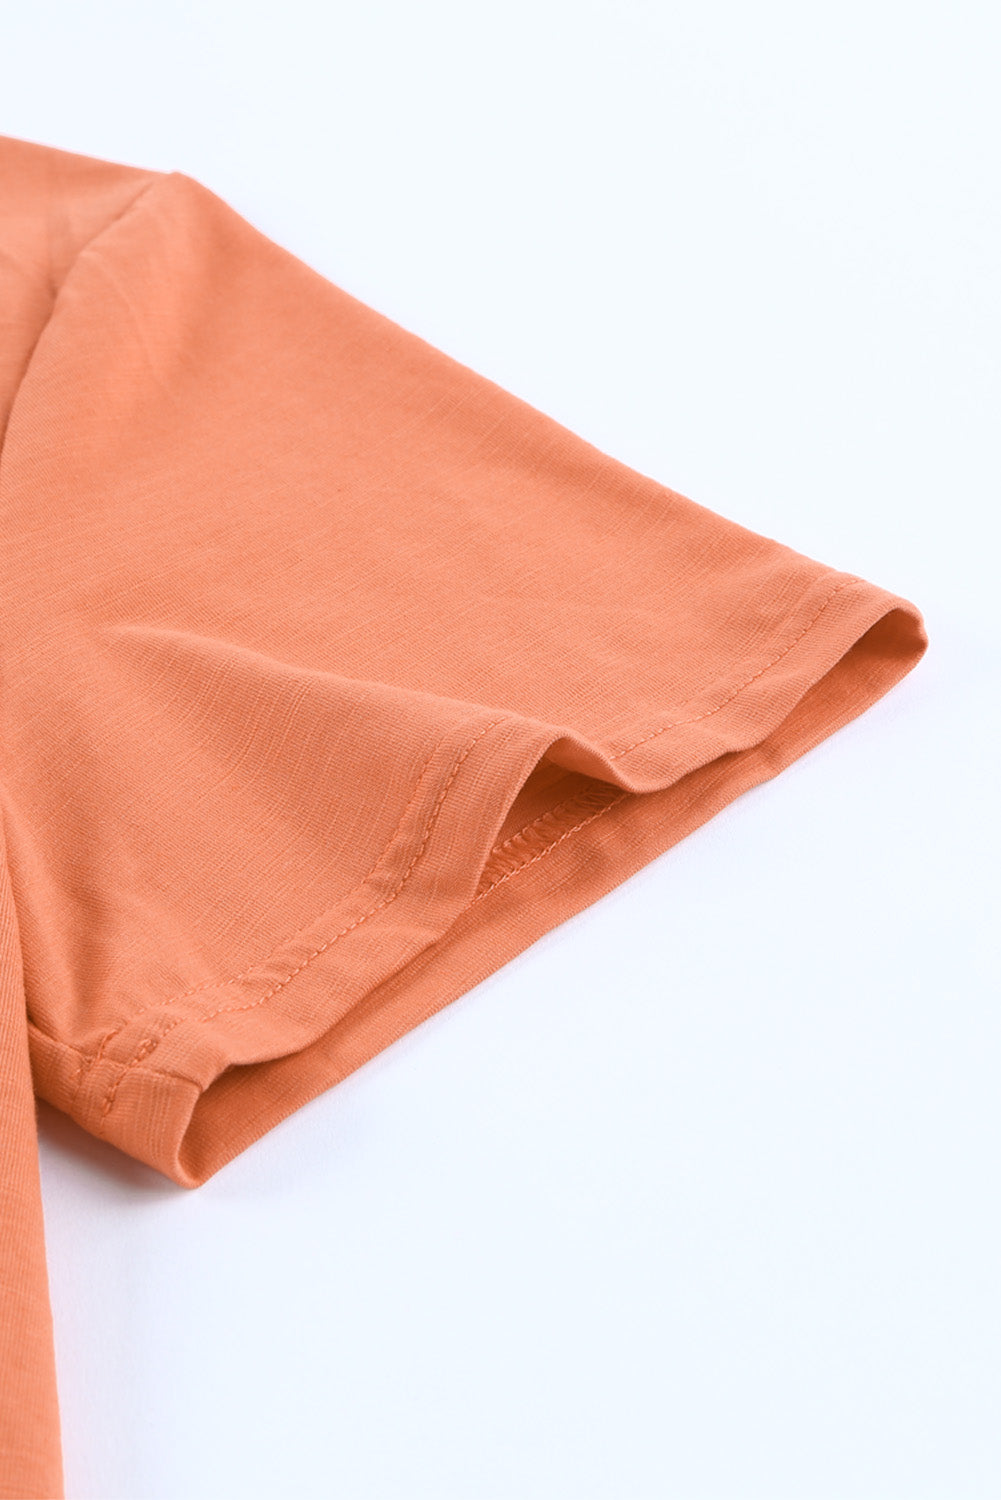 Orange Holes Crew Neck Cotton Mixed Short Sleeve T-shirt